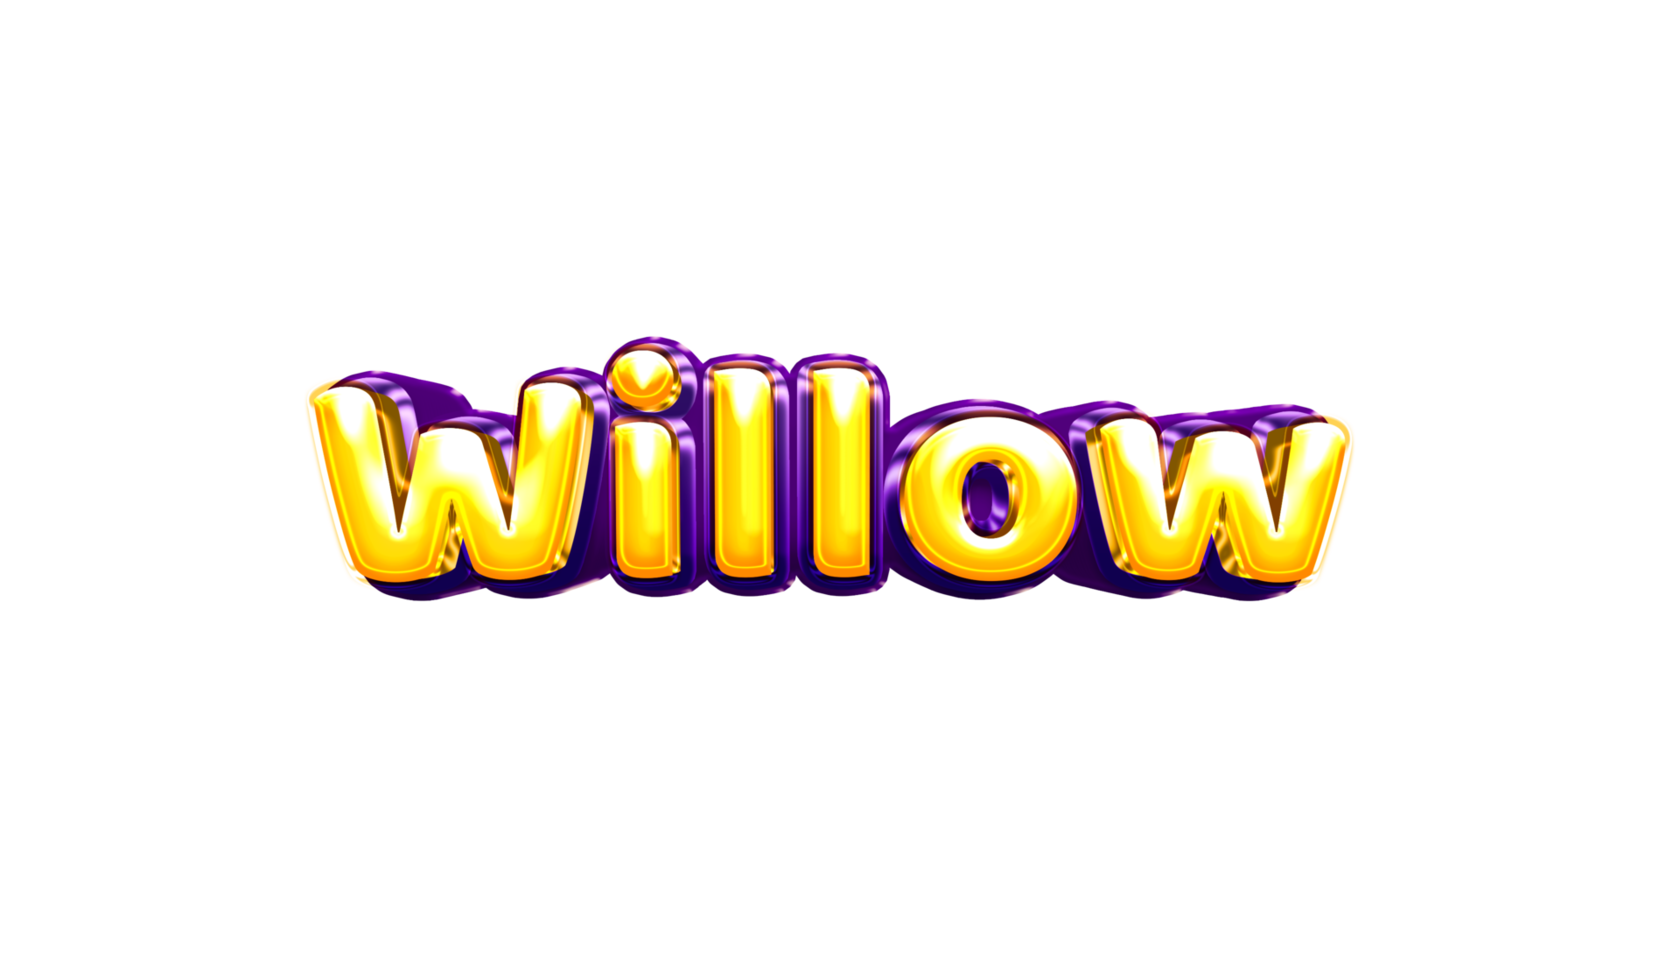 Namensaufkleber Mädchen bunt Party Ballon Geburtstag Helium Luft glänzend gelb lila Ausschnitt Willow png